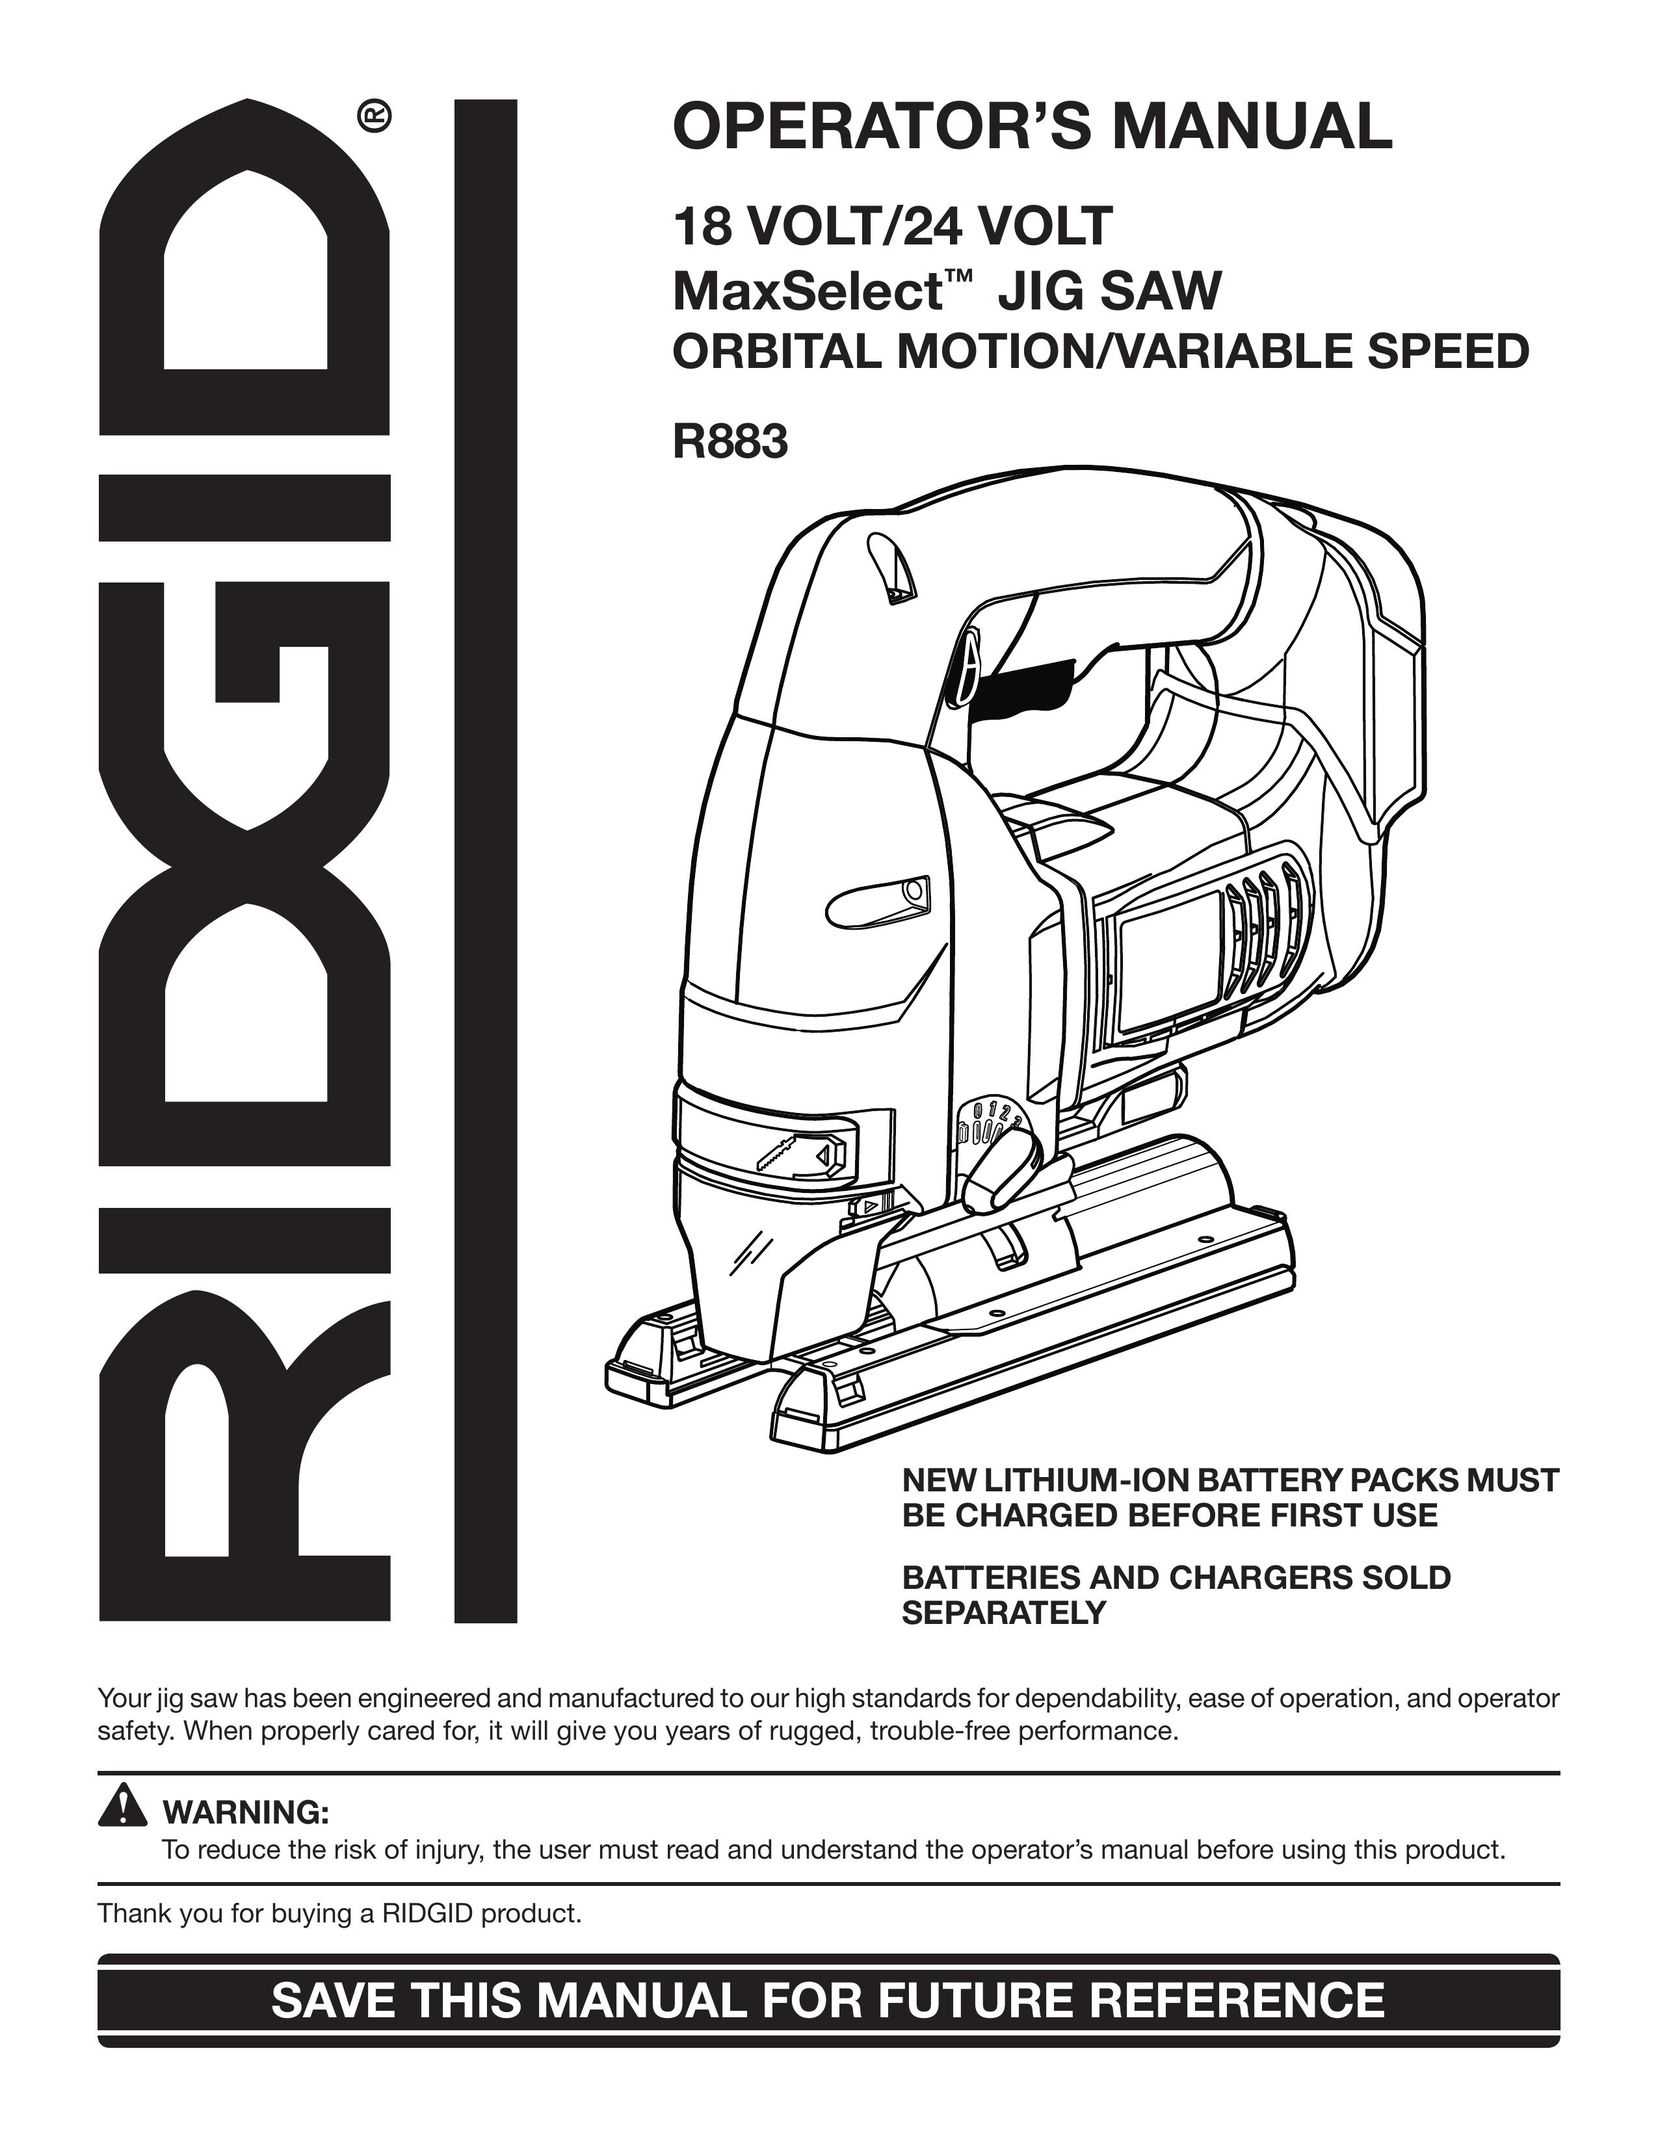 RIDGID R883 Saw User Manual